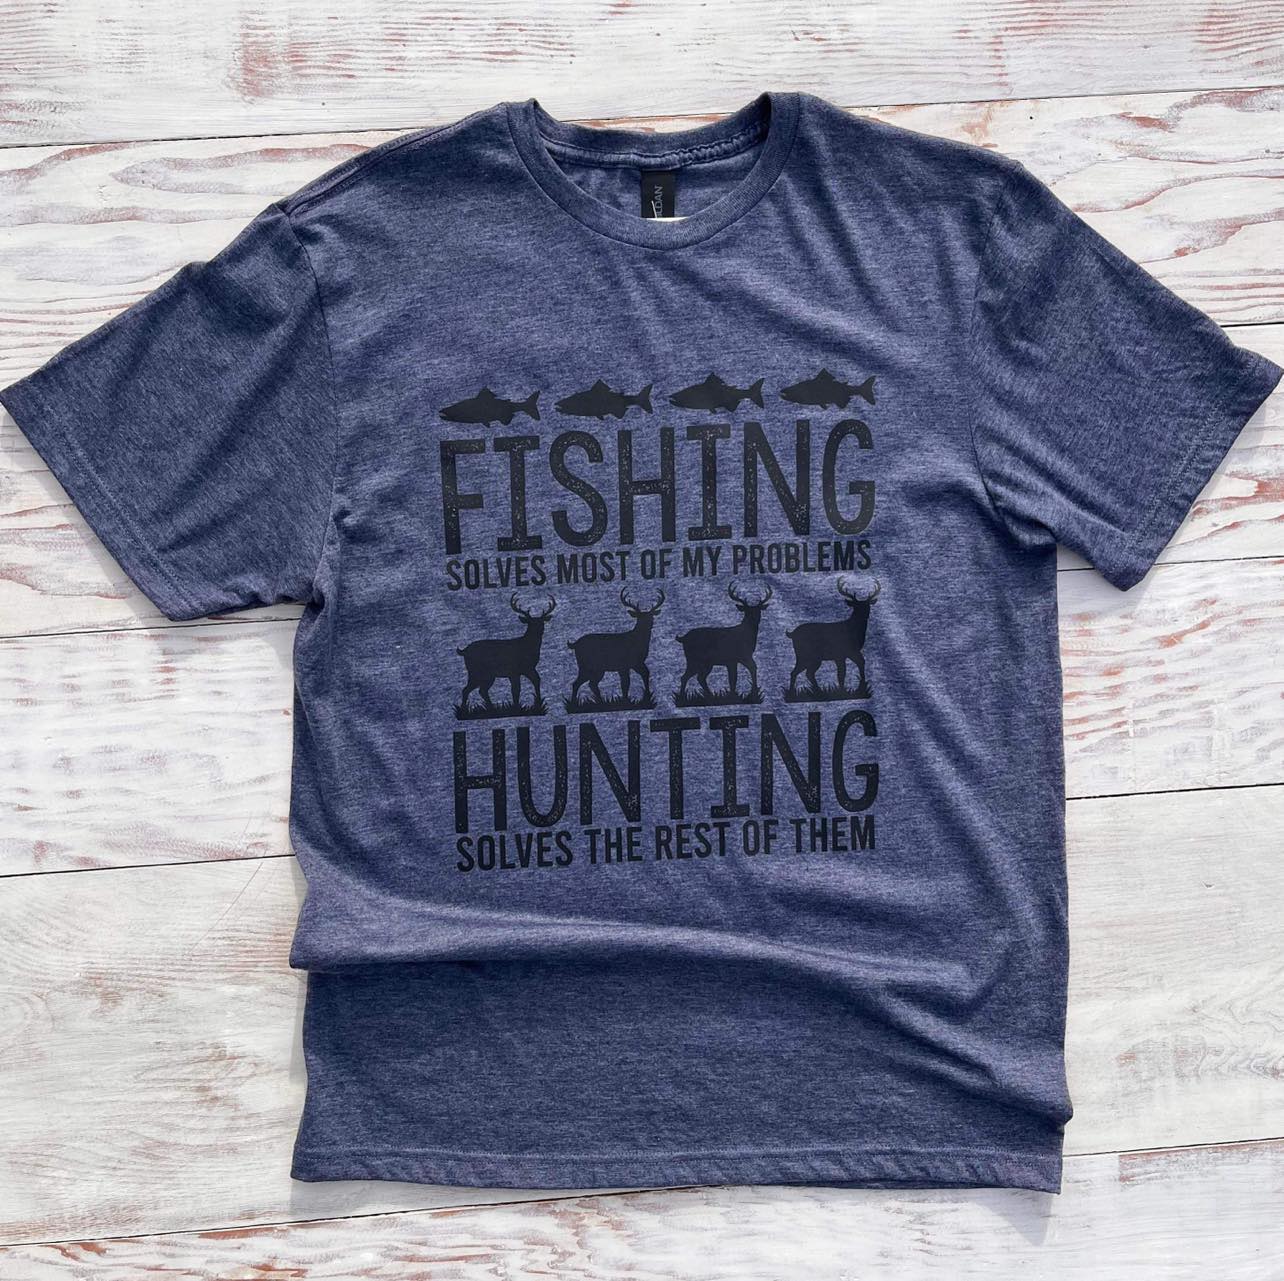 Blue Fishing & Hunting Solve My Problems T-Shirt - Lavender Hills BeautyLavender Hills Beauty Studio